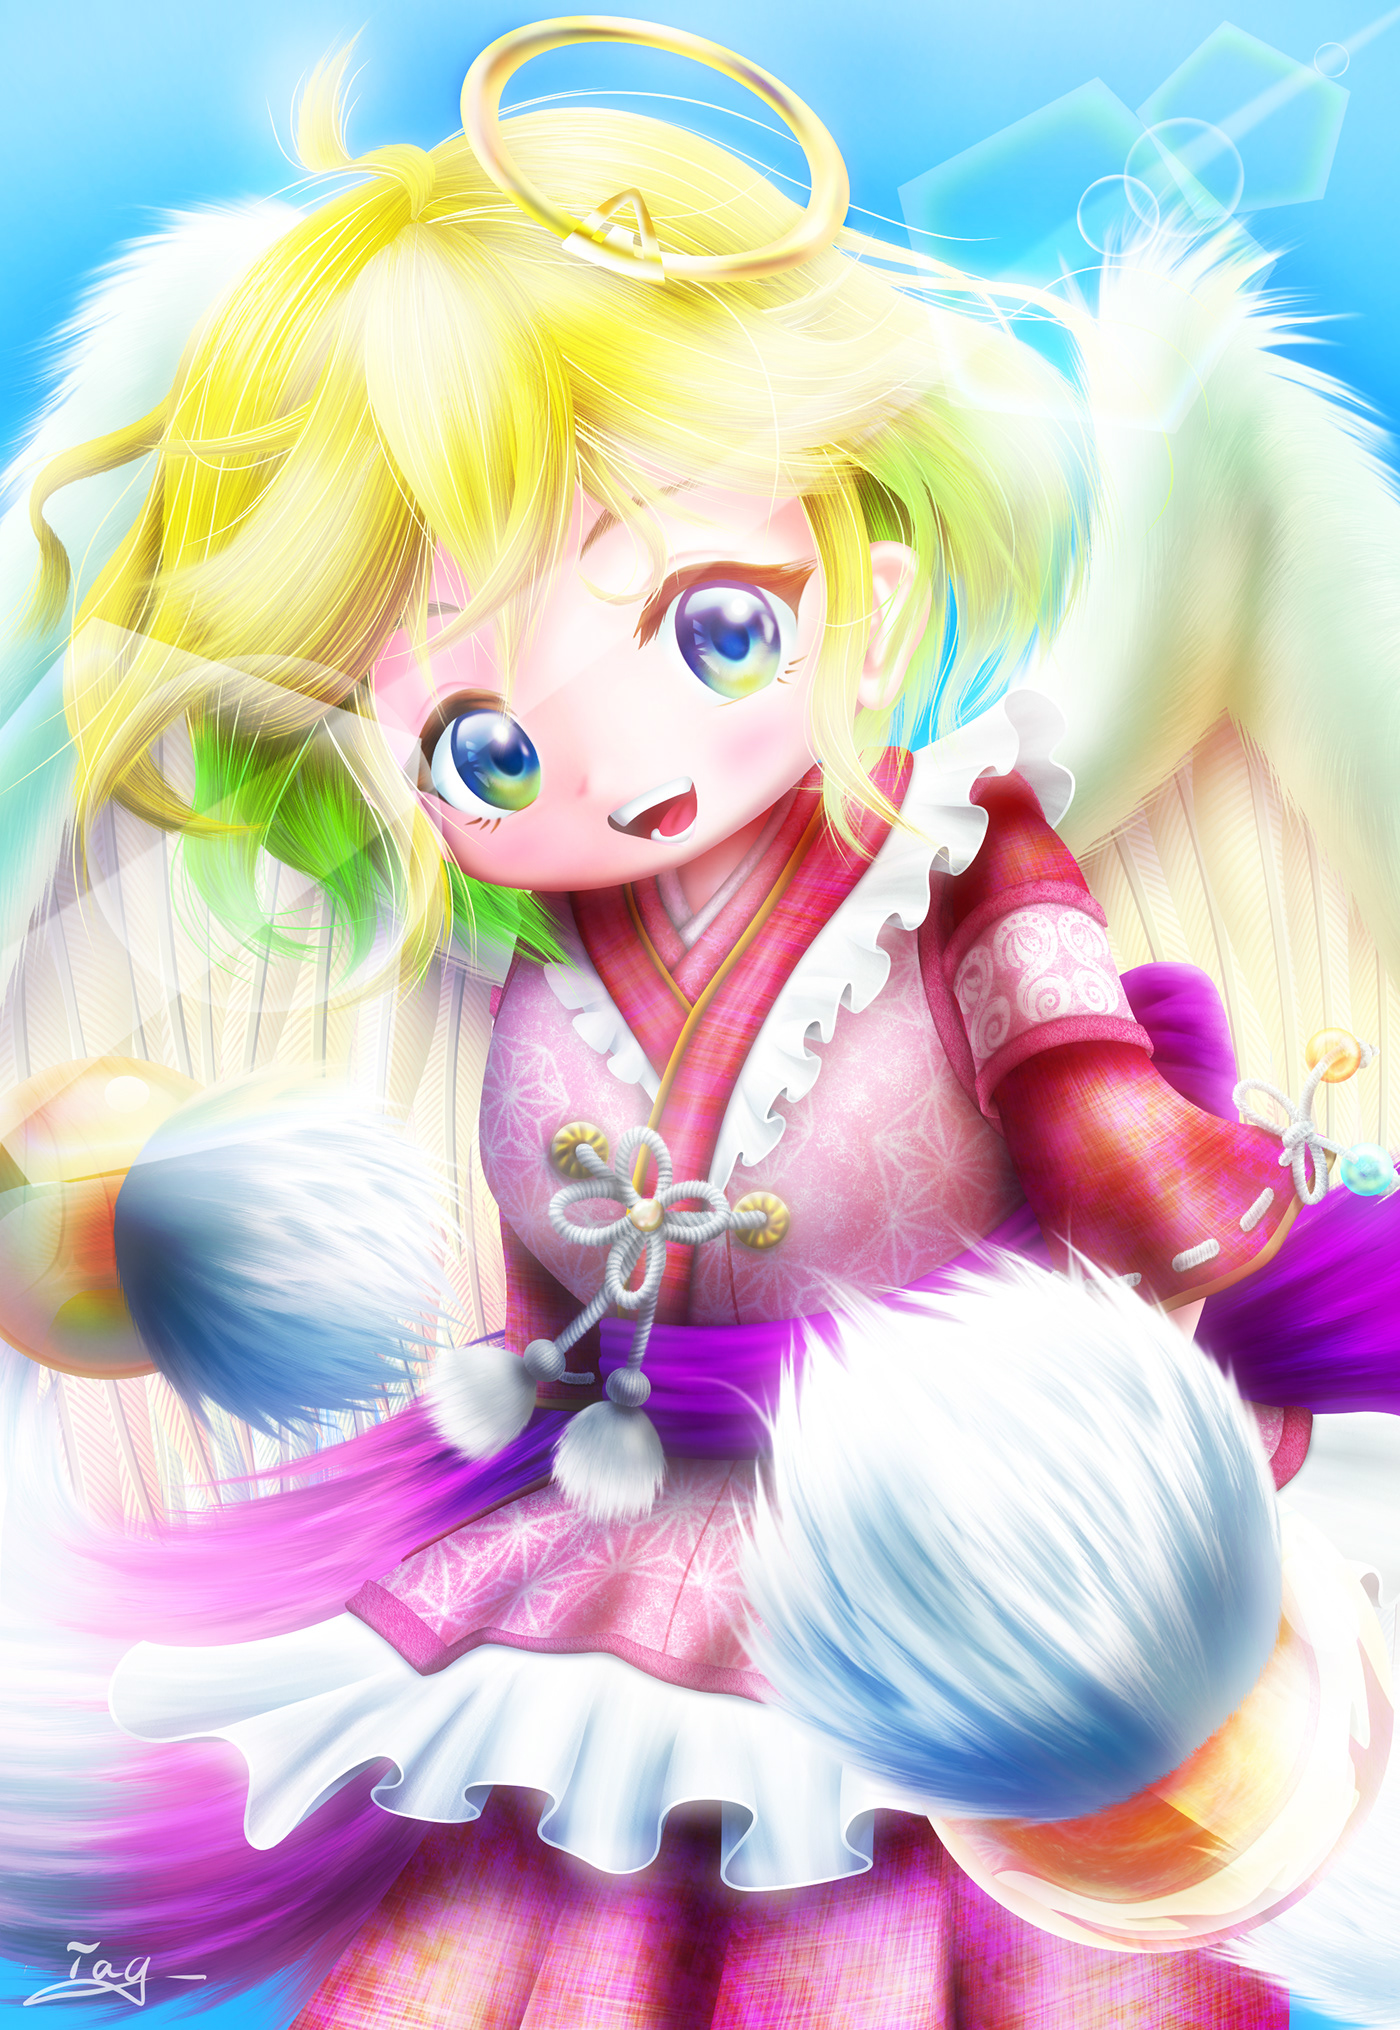 Character digitalart cute girl angel digital illustration fantasy summer kimono original character